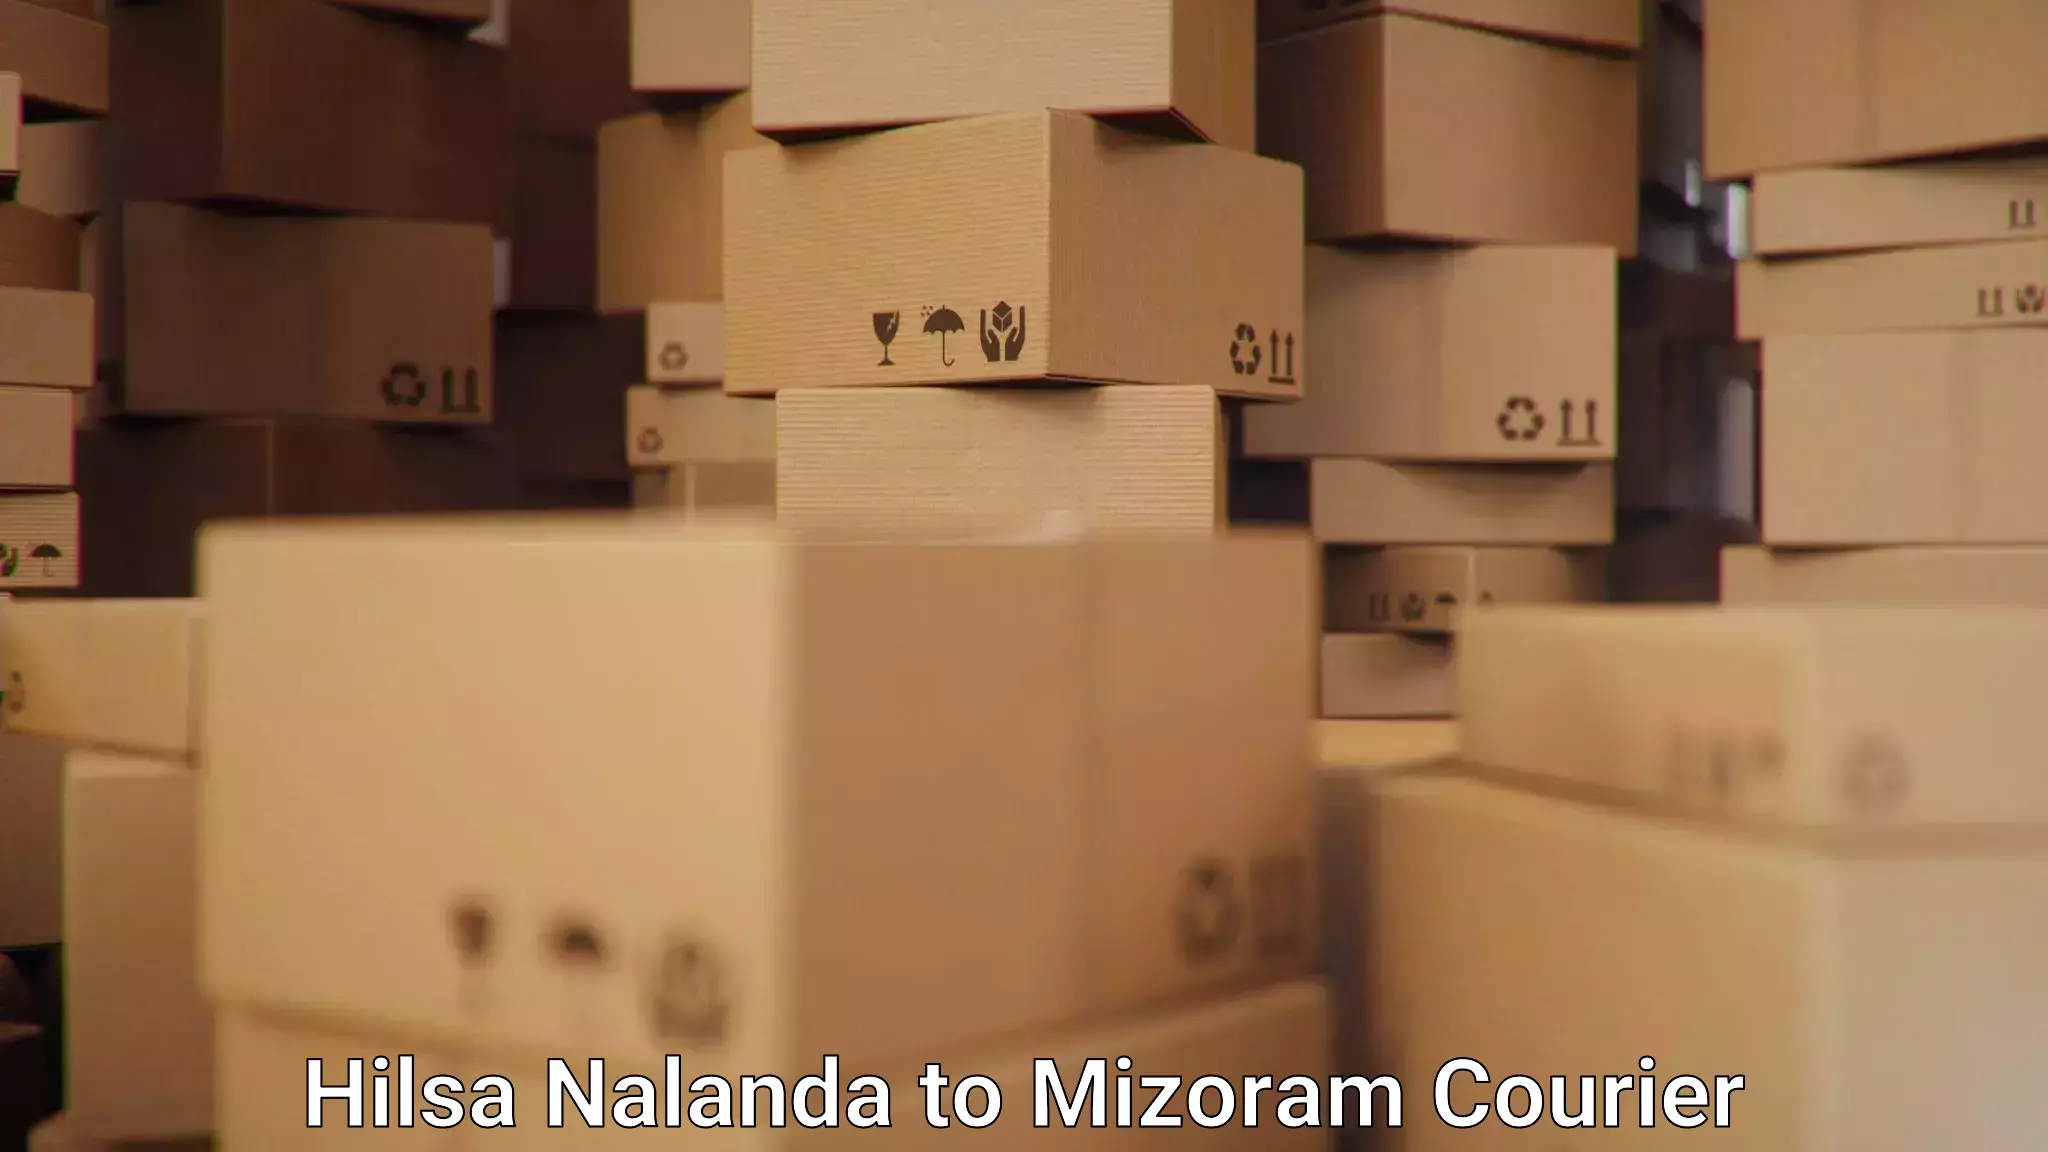 State-of-the-art courier technology Hilsa Nalanda to Siaha